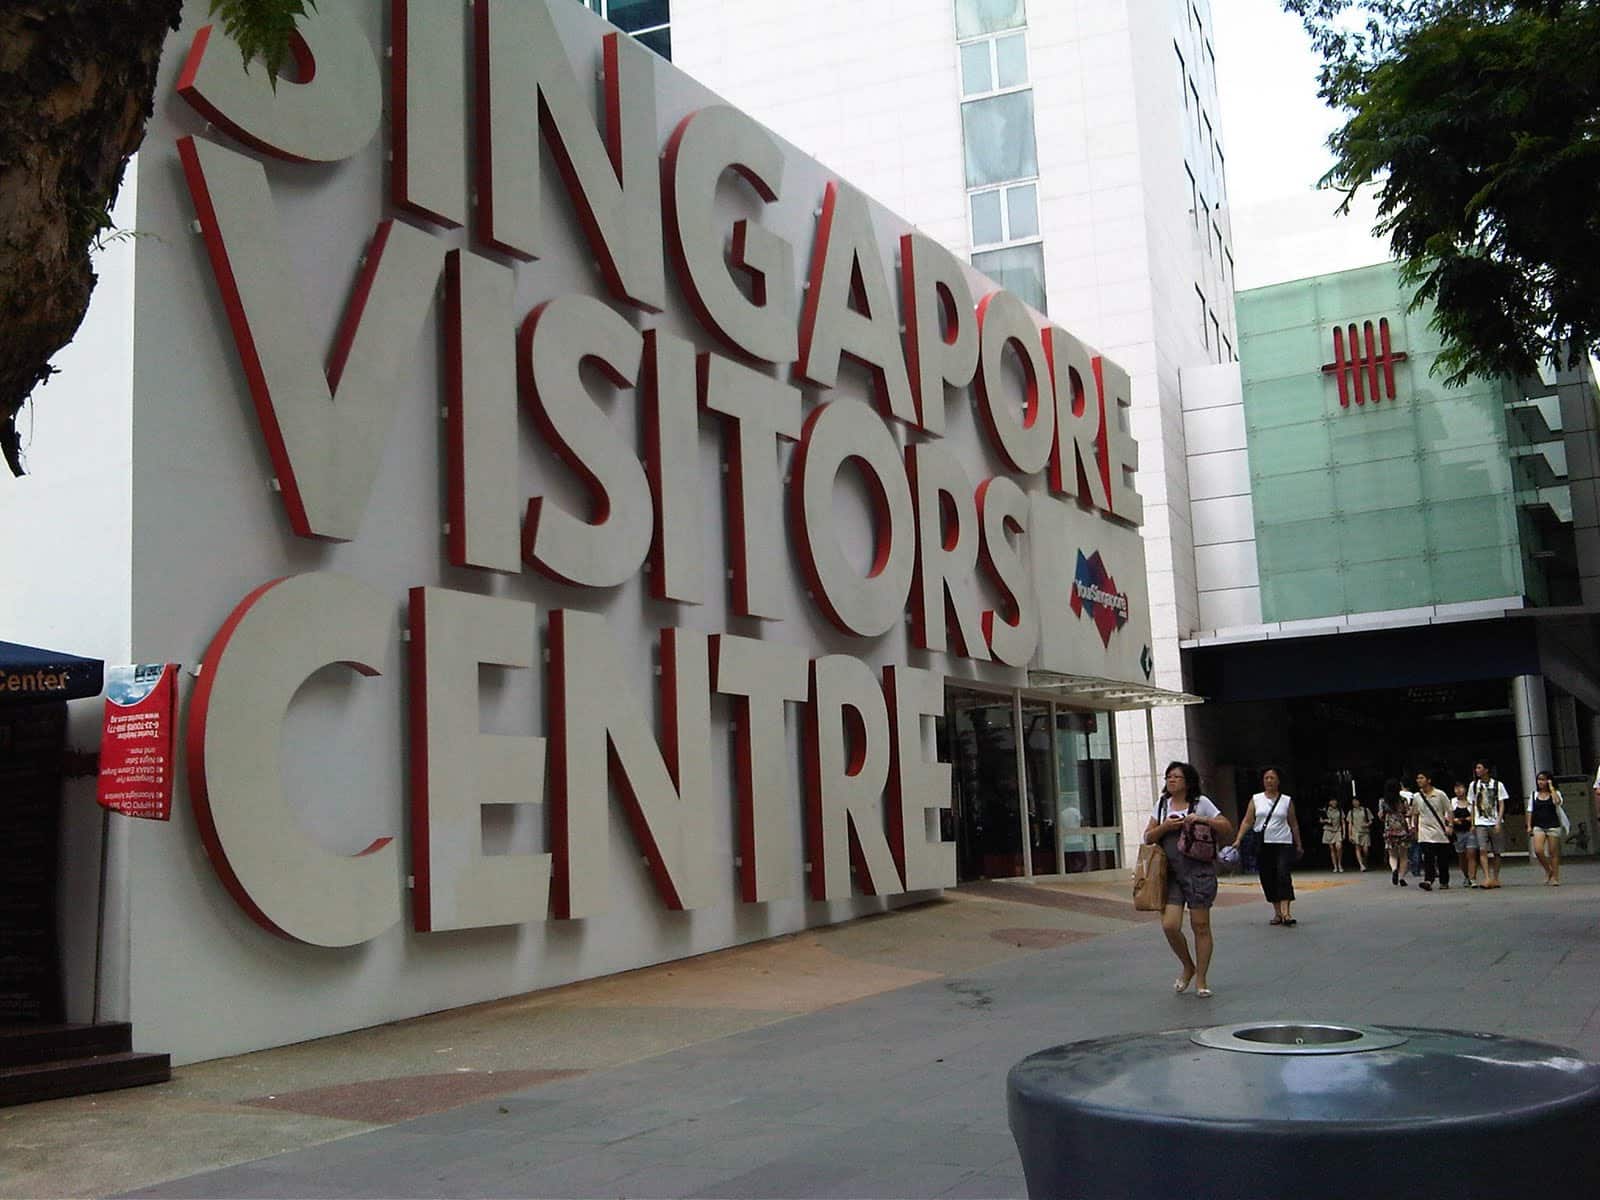 Singapore tourist center